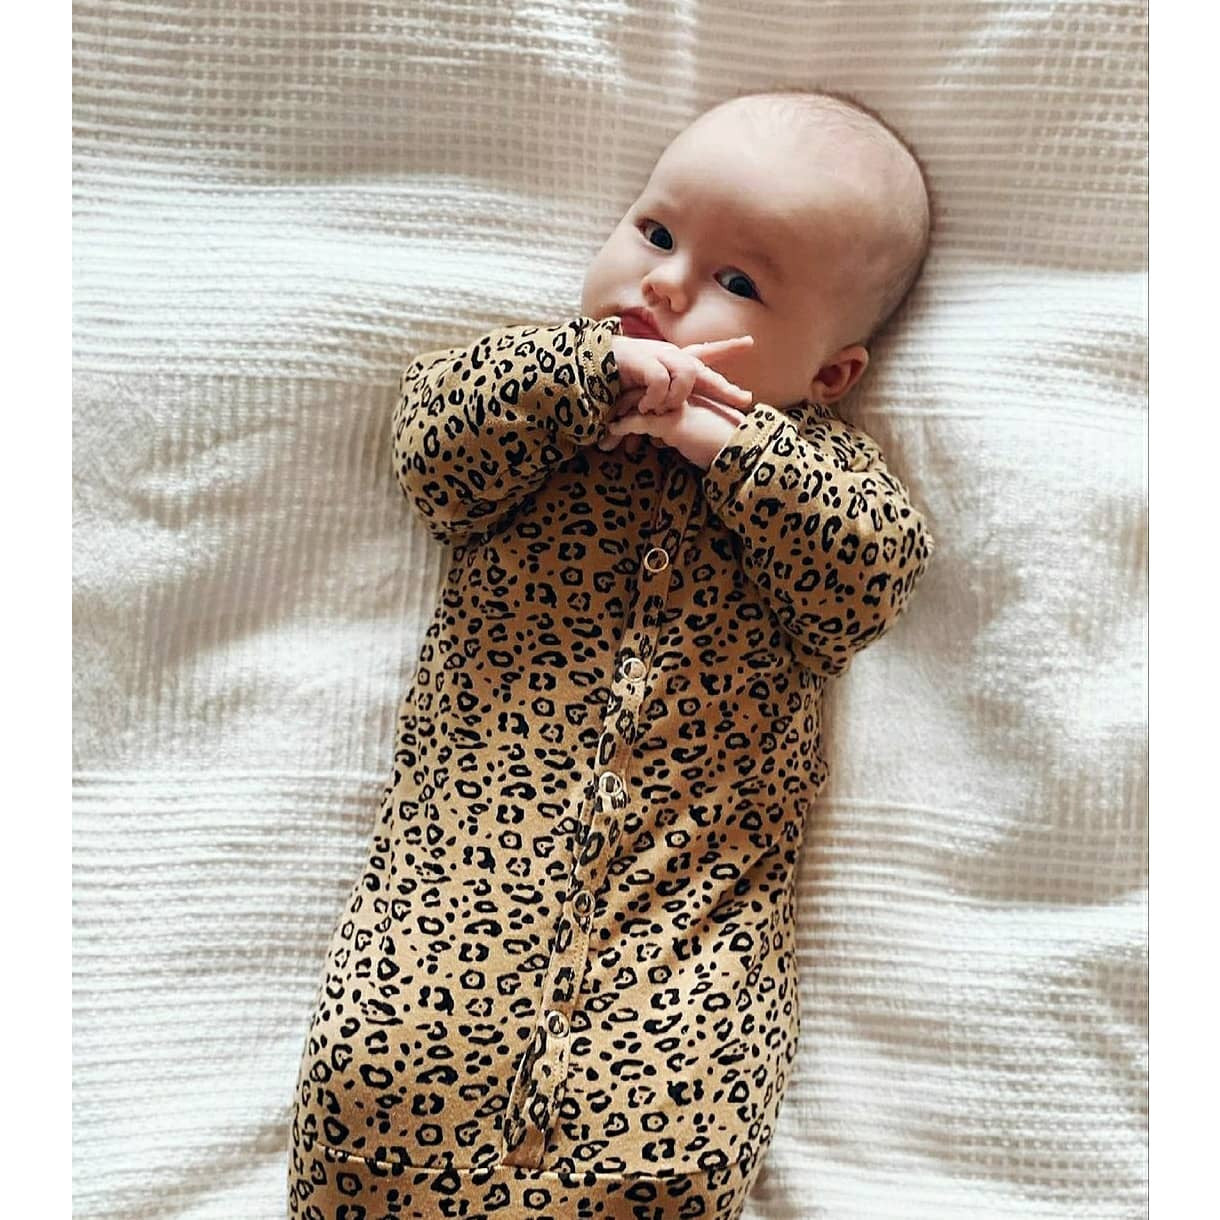 Buy DPSKY Infant Baby Girl Boy Cotton Sleeper Gown Knotted Pajamas Newborn  Sleepwear Sleeping Bag with Headband&Hat at Amazon.in